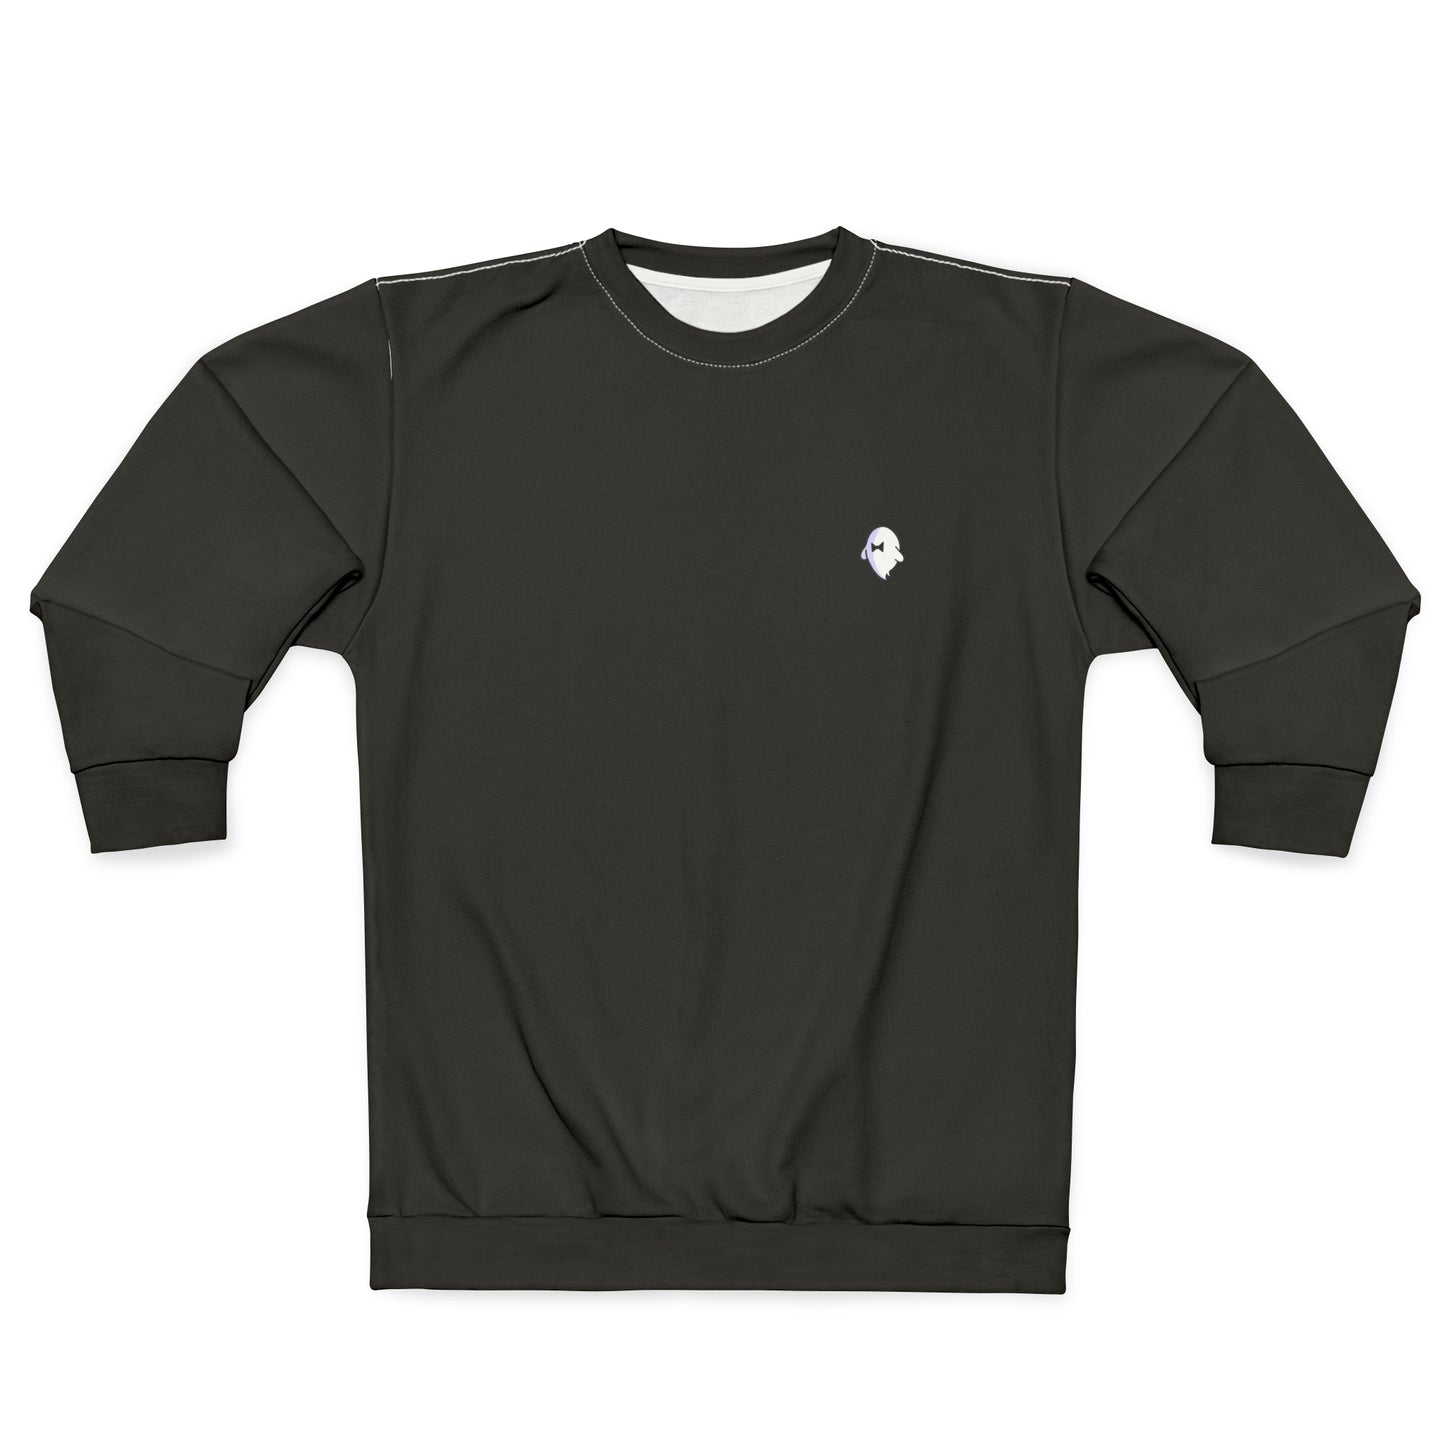 Plain Black Sweatshirt